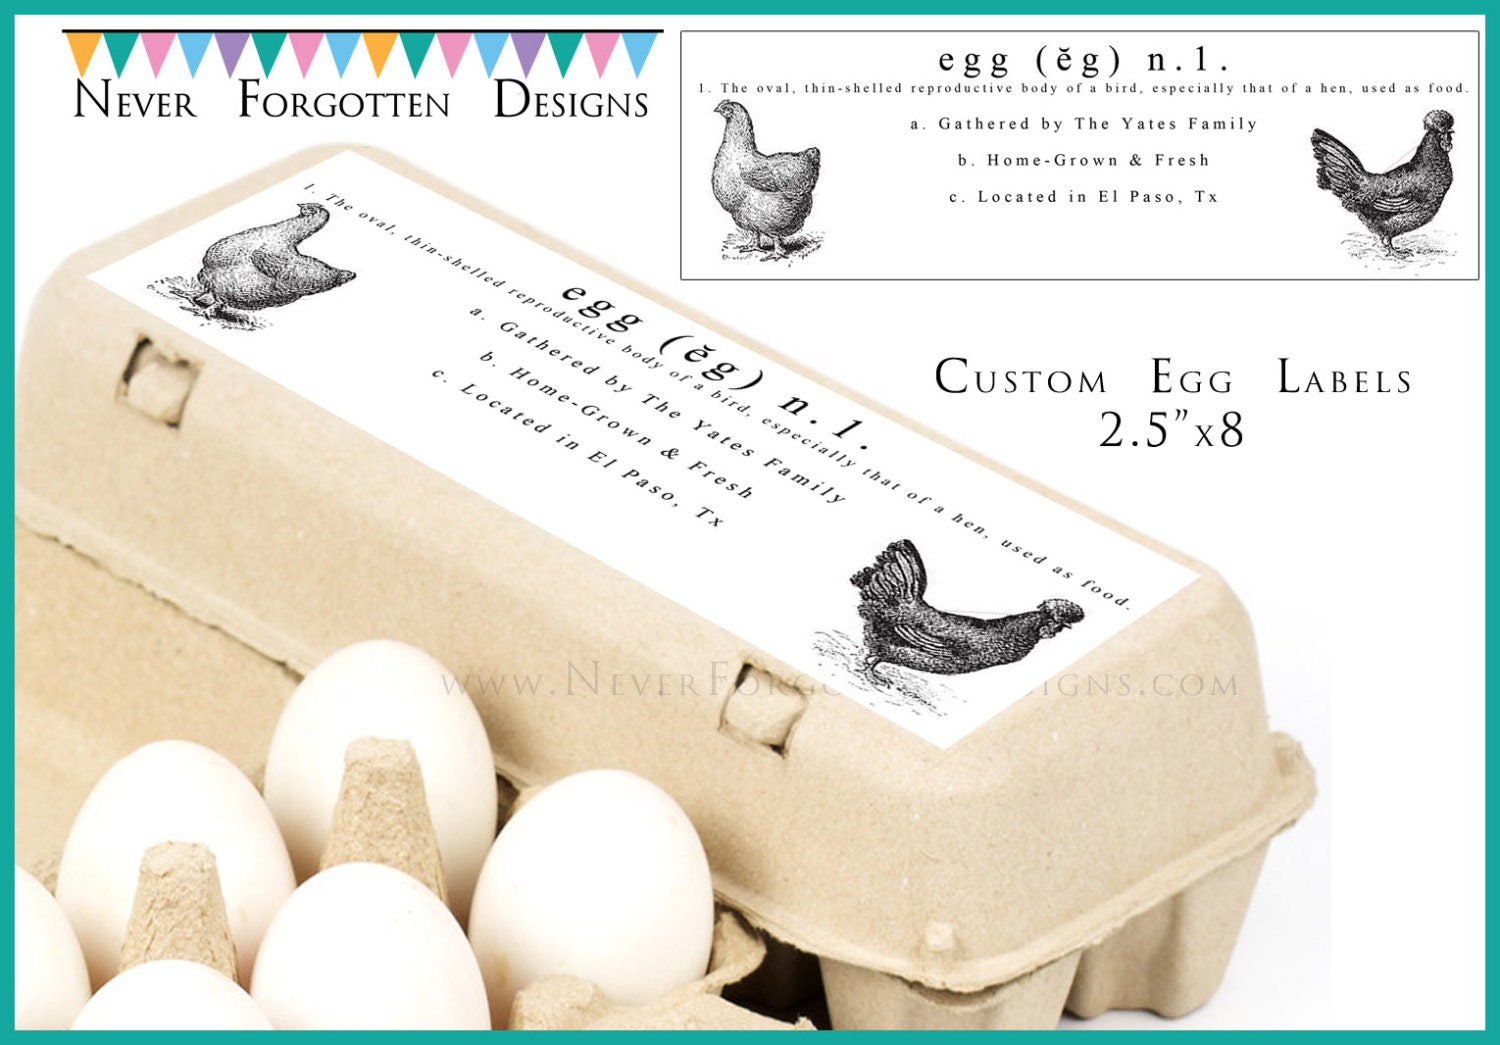 Egg Carton Label Size